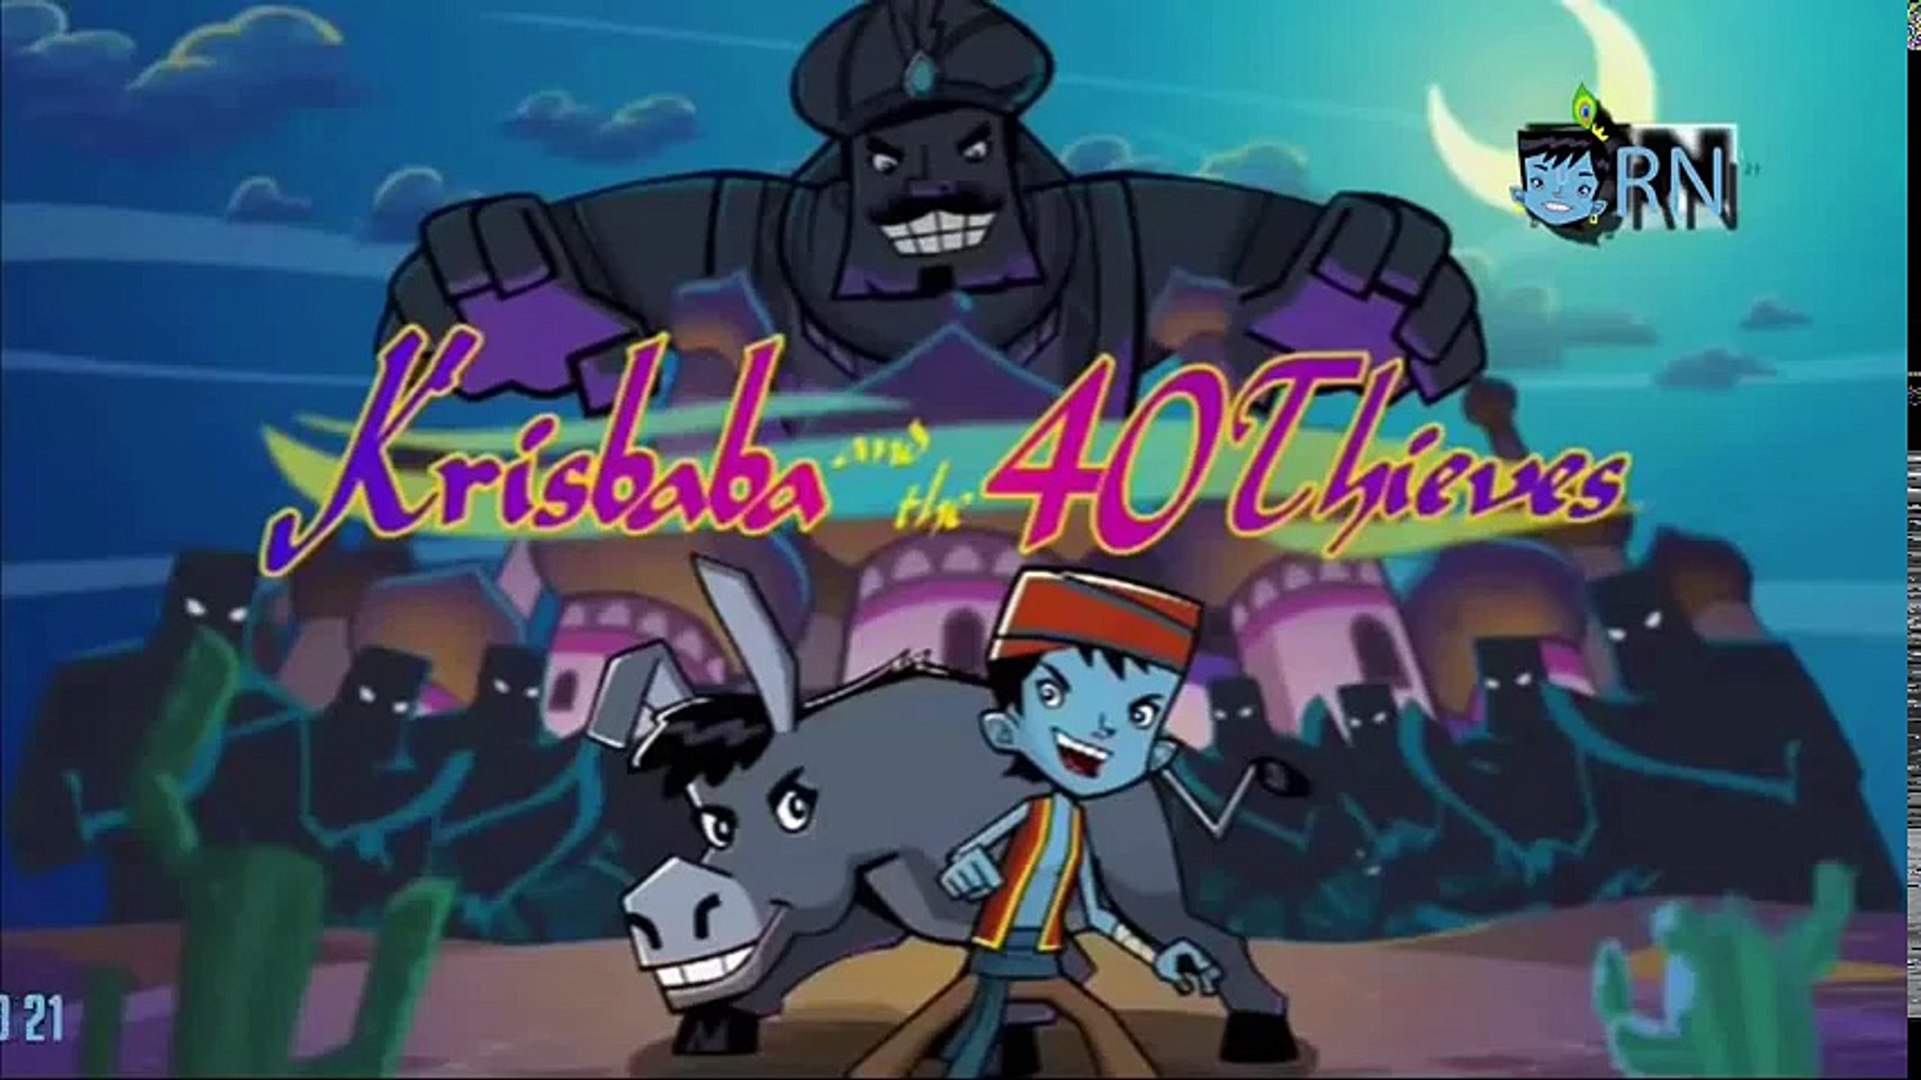 Hindi Krrish Baba 40 Chor Cartoons for Entertainment of Kids